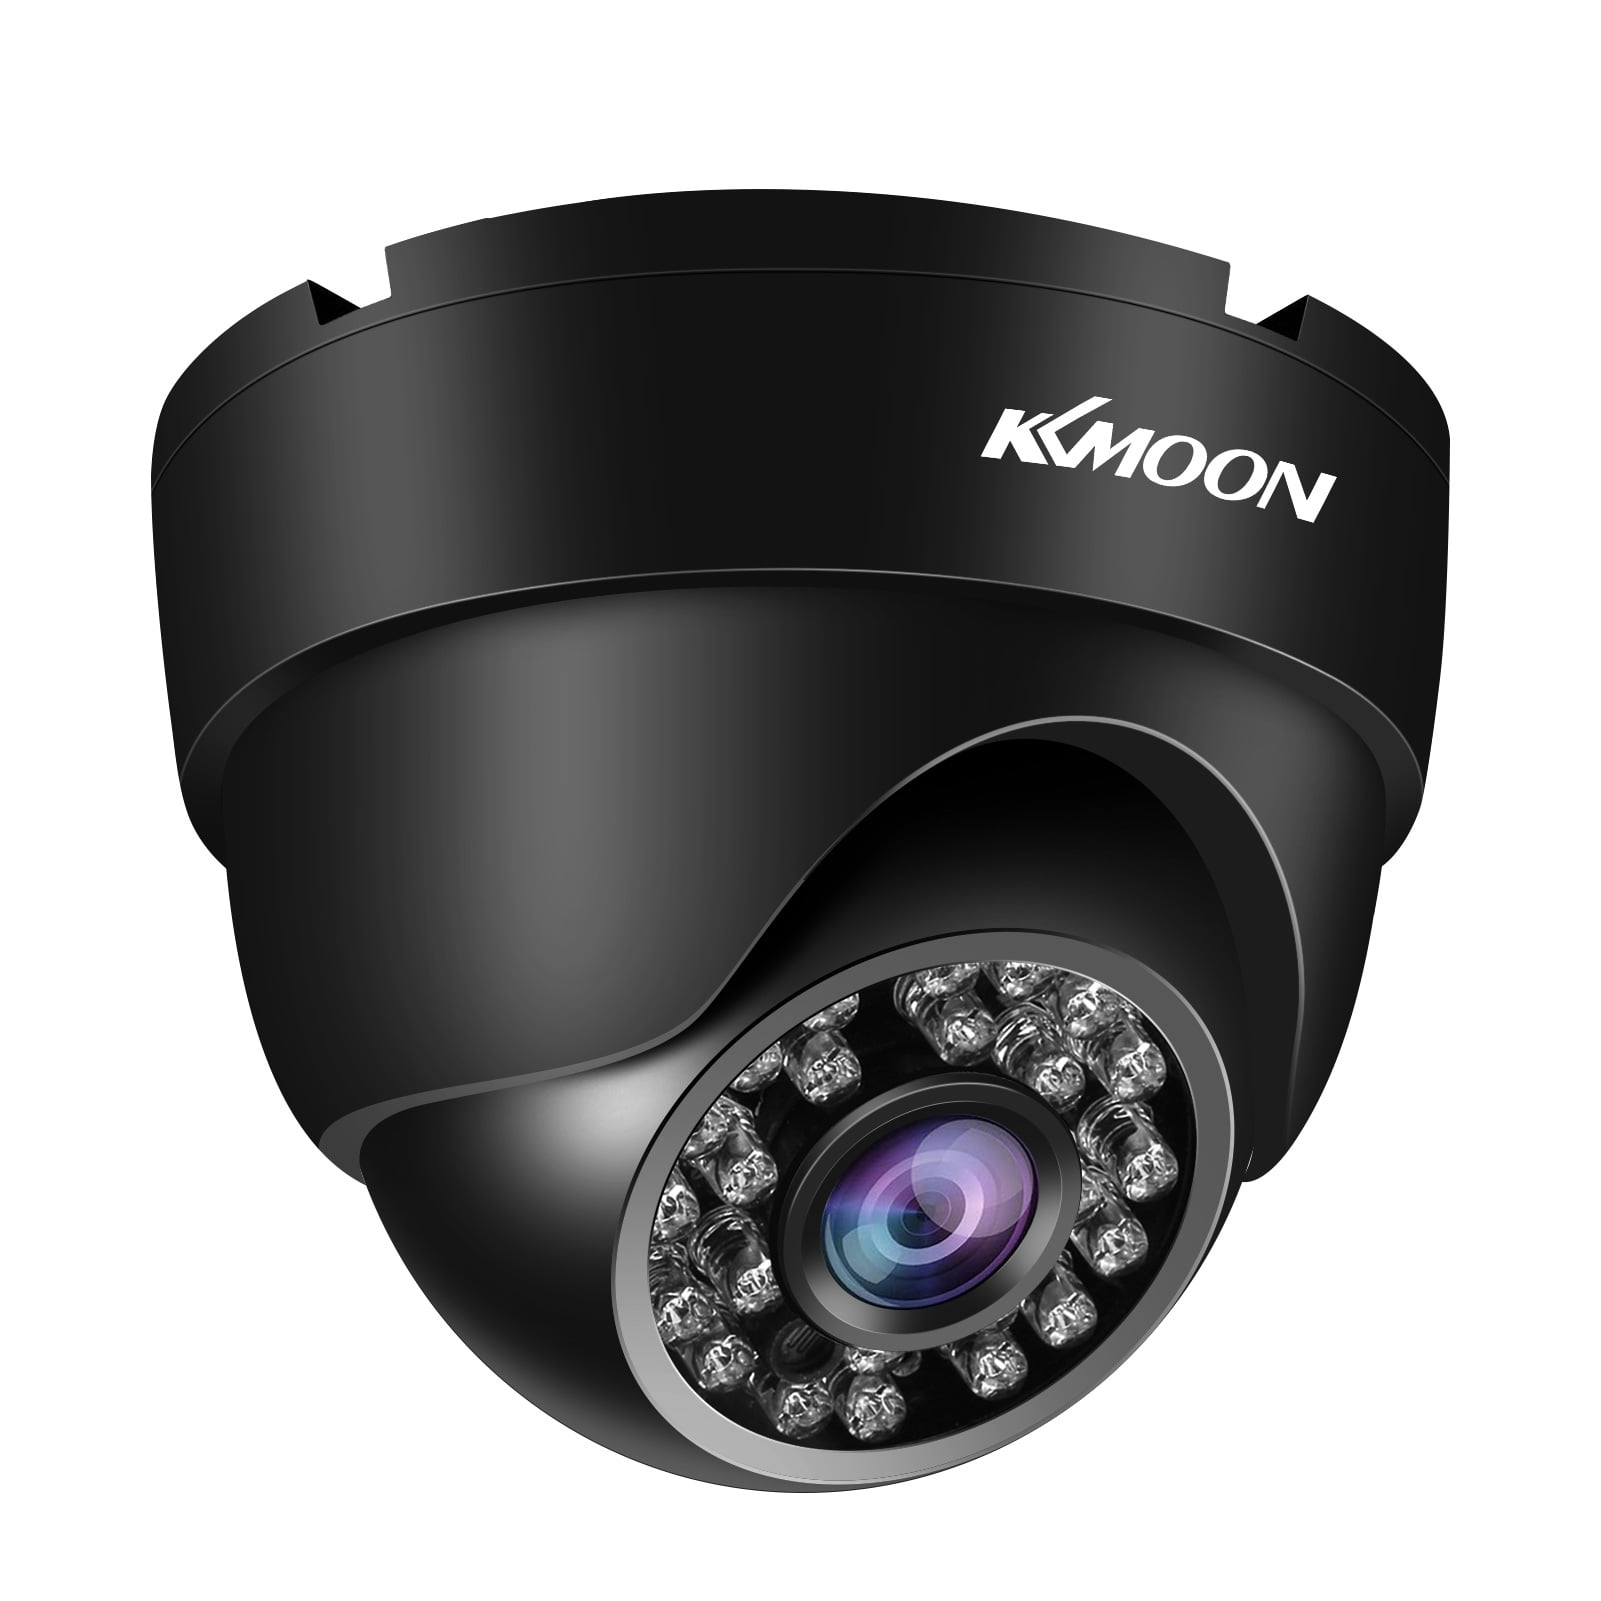 KKmoon 8CH 1080P AHD DVR 4stk 1080P 2MP FHD Indoor Outdoor CCTV Kamera Kit W7N4 